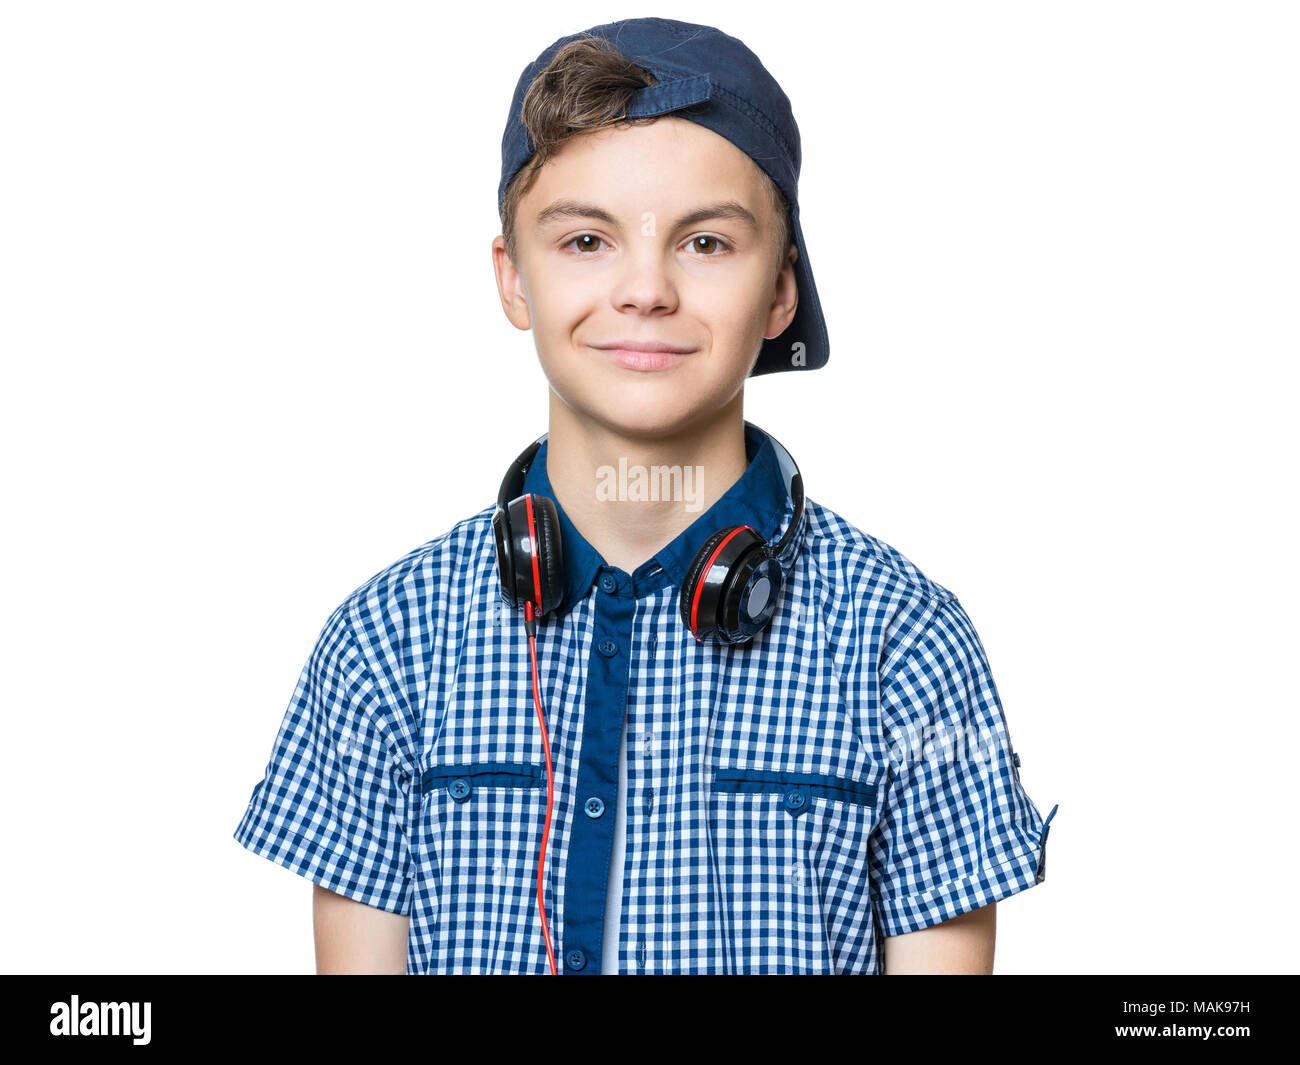 Teen boy with cap and headphones Stock Photo